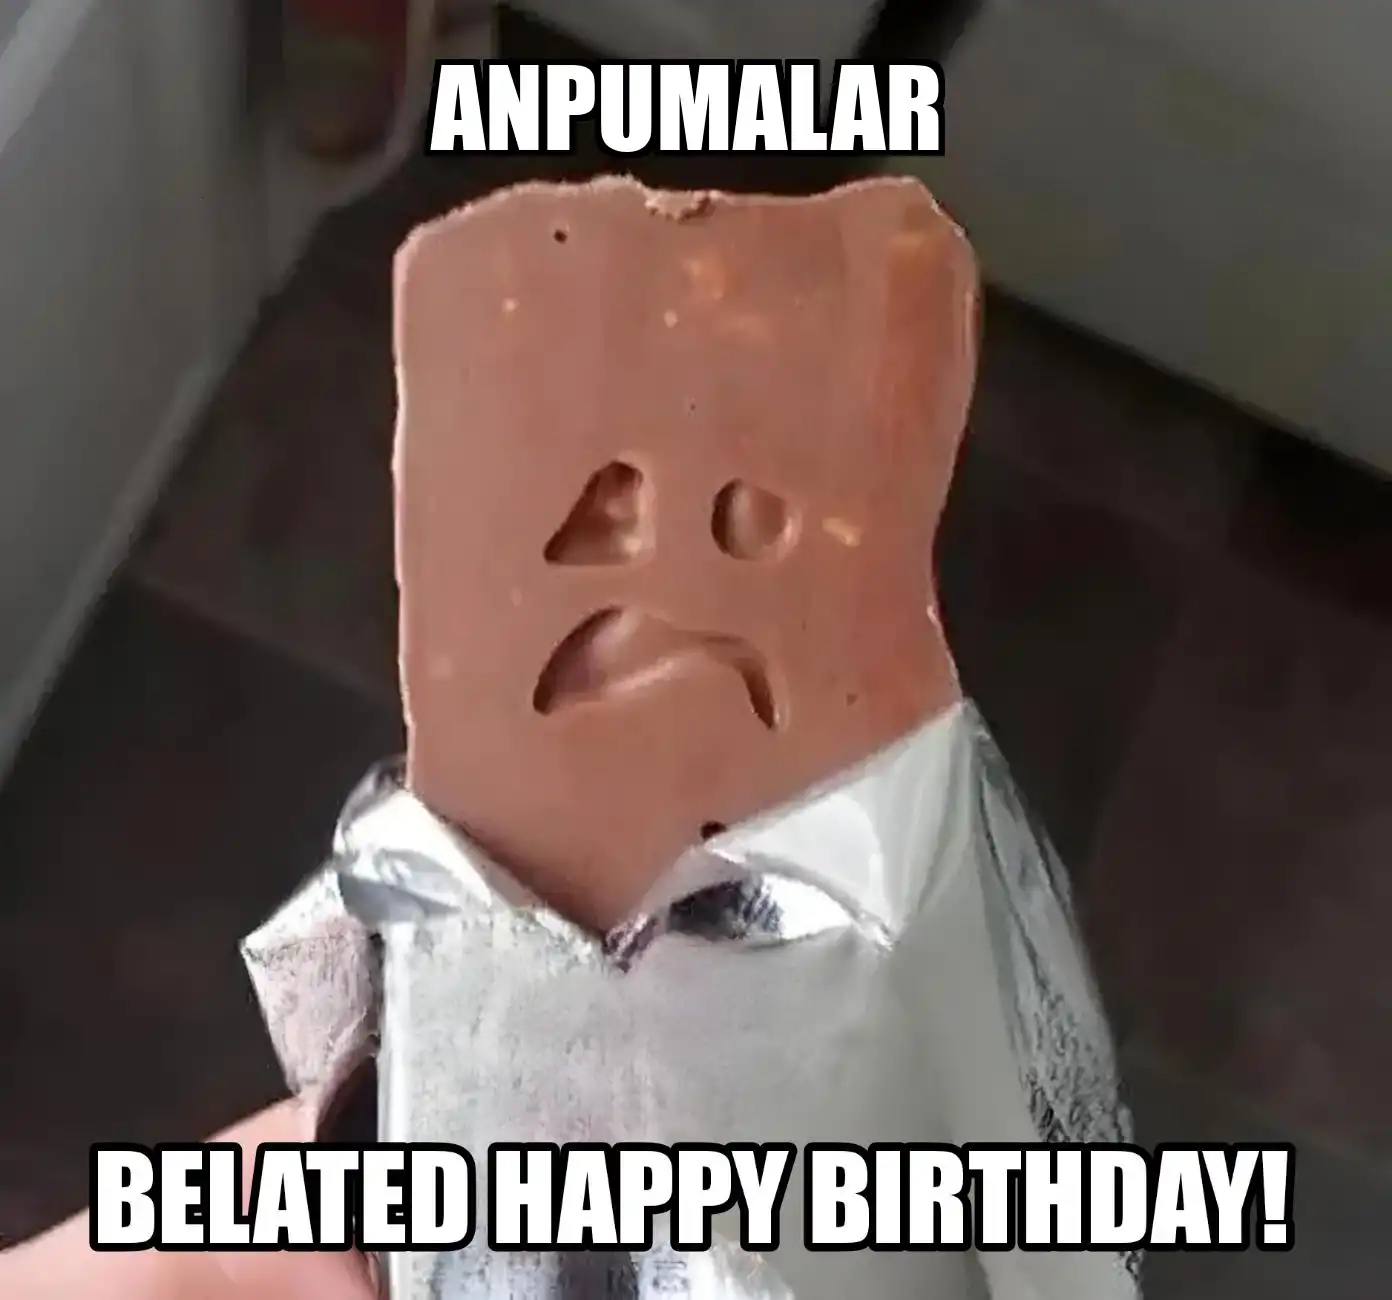 Happy Birthday Anpumalar Belated Happy Birthday Meme